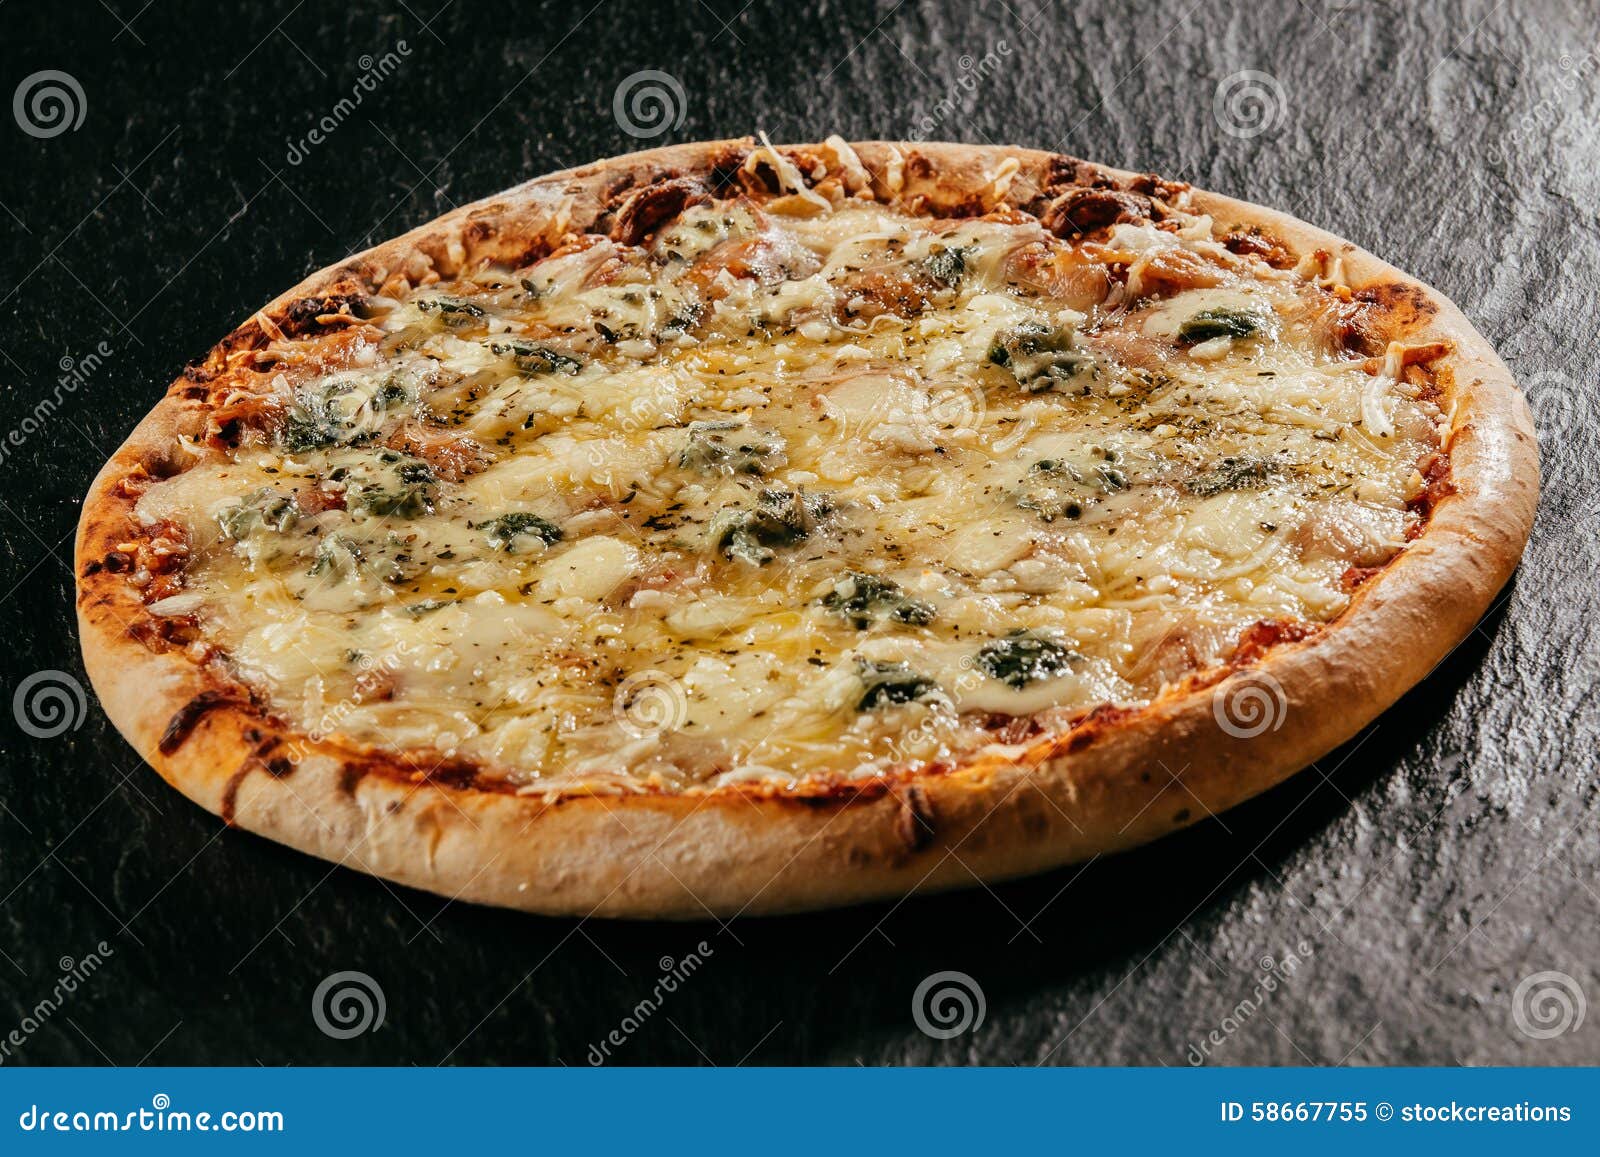 la trattoria пицца четыре сыра фото 57